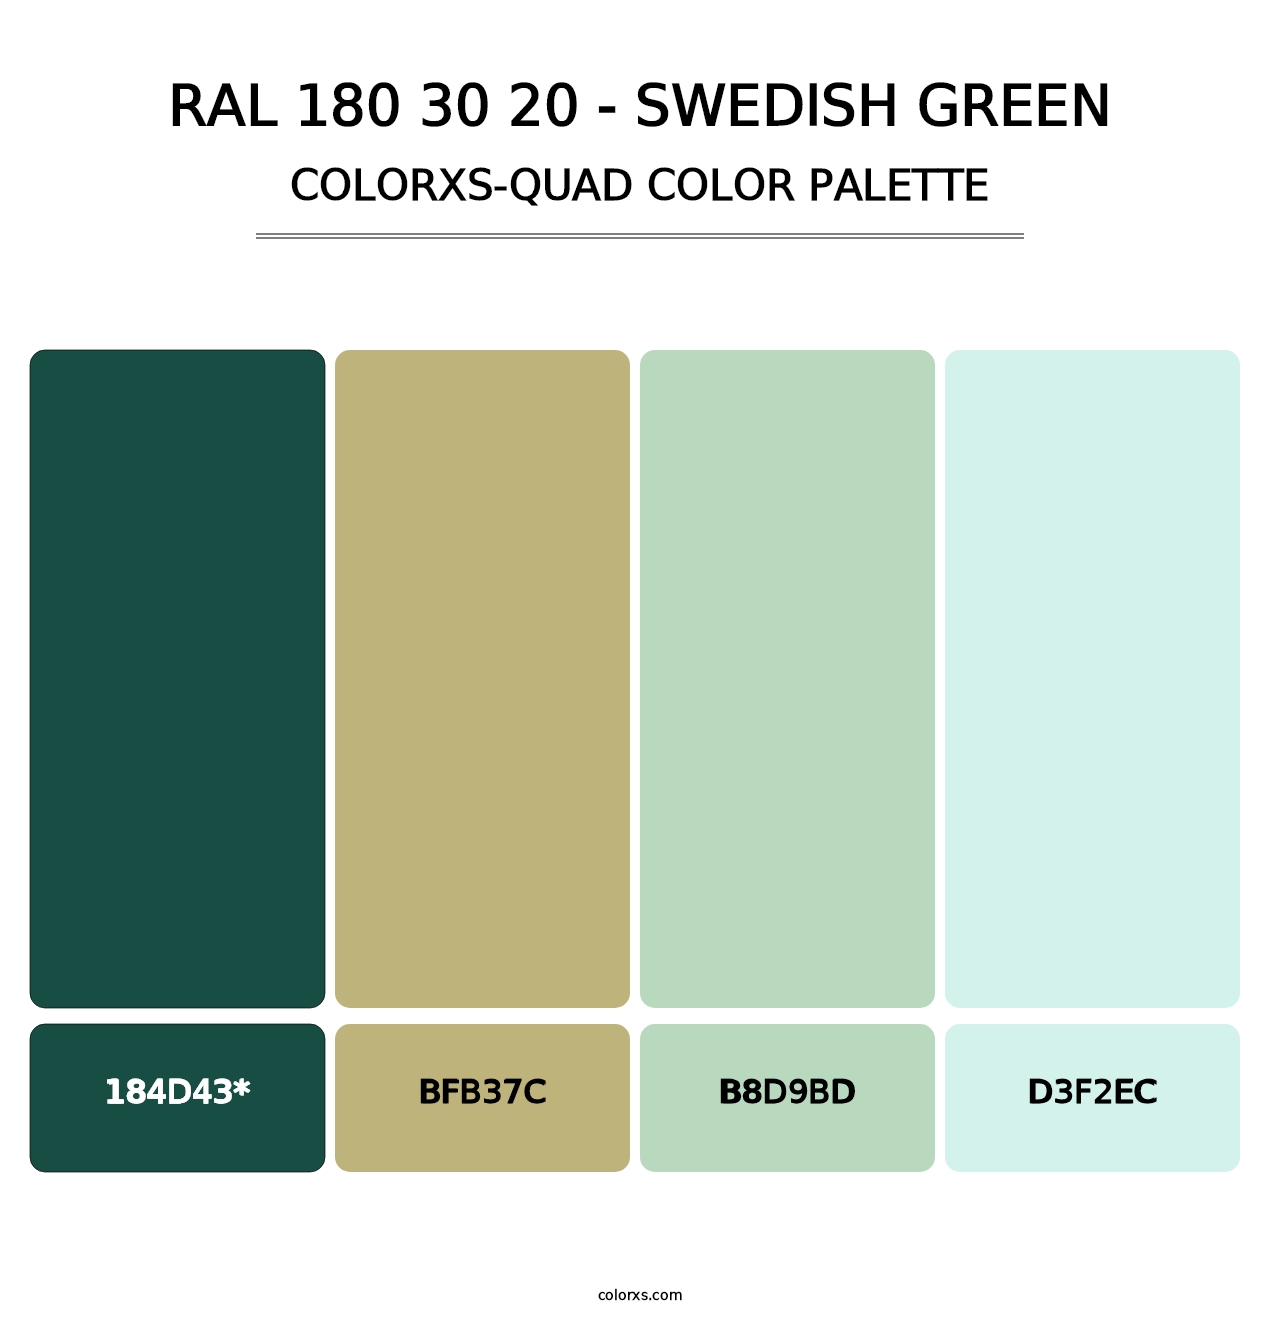 RAL 180 30 20 - Swedish Green - Colorxs Quad Palette